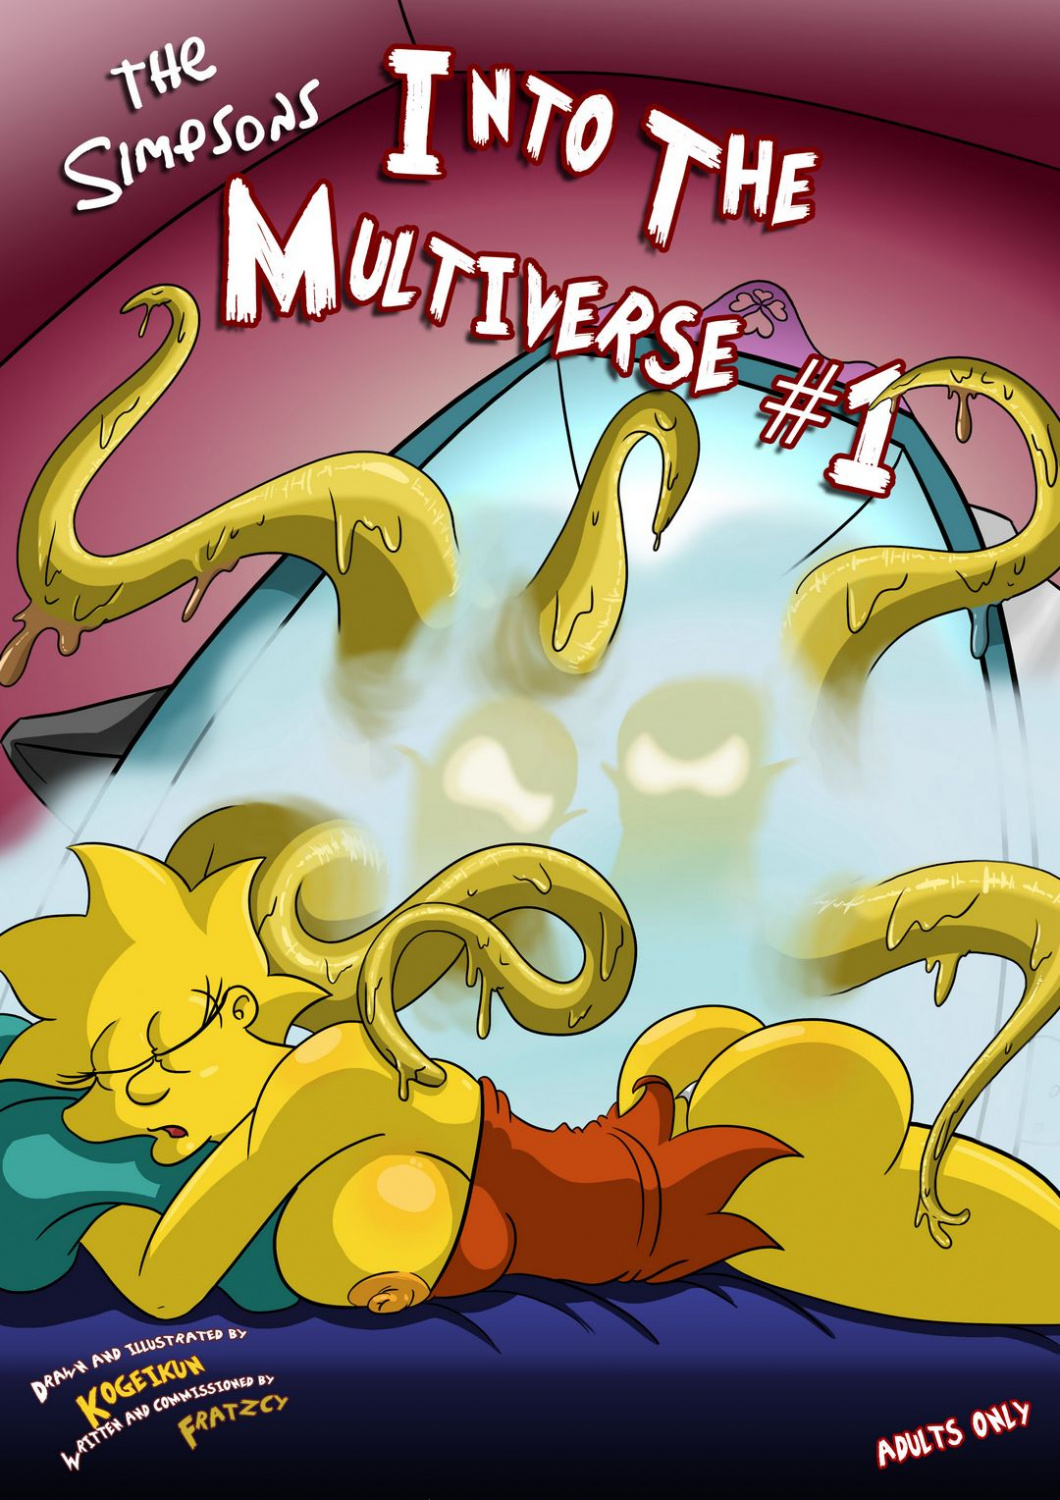 1060px x 1500px - The Simpsons Into the Multiverse - Multporn Comics & Hentai manga